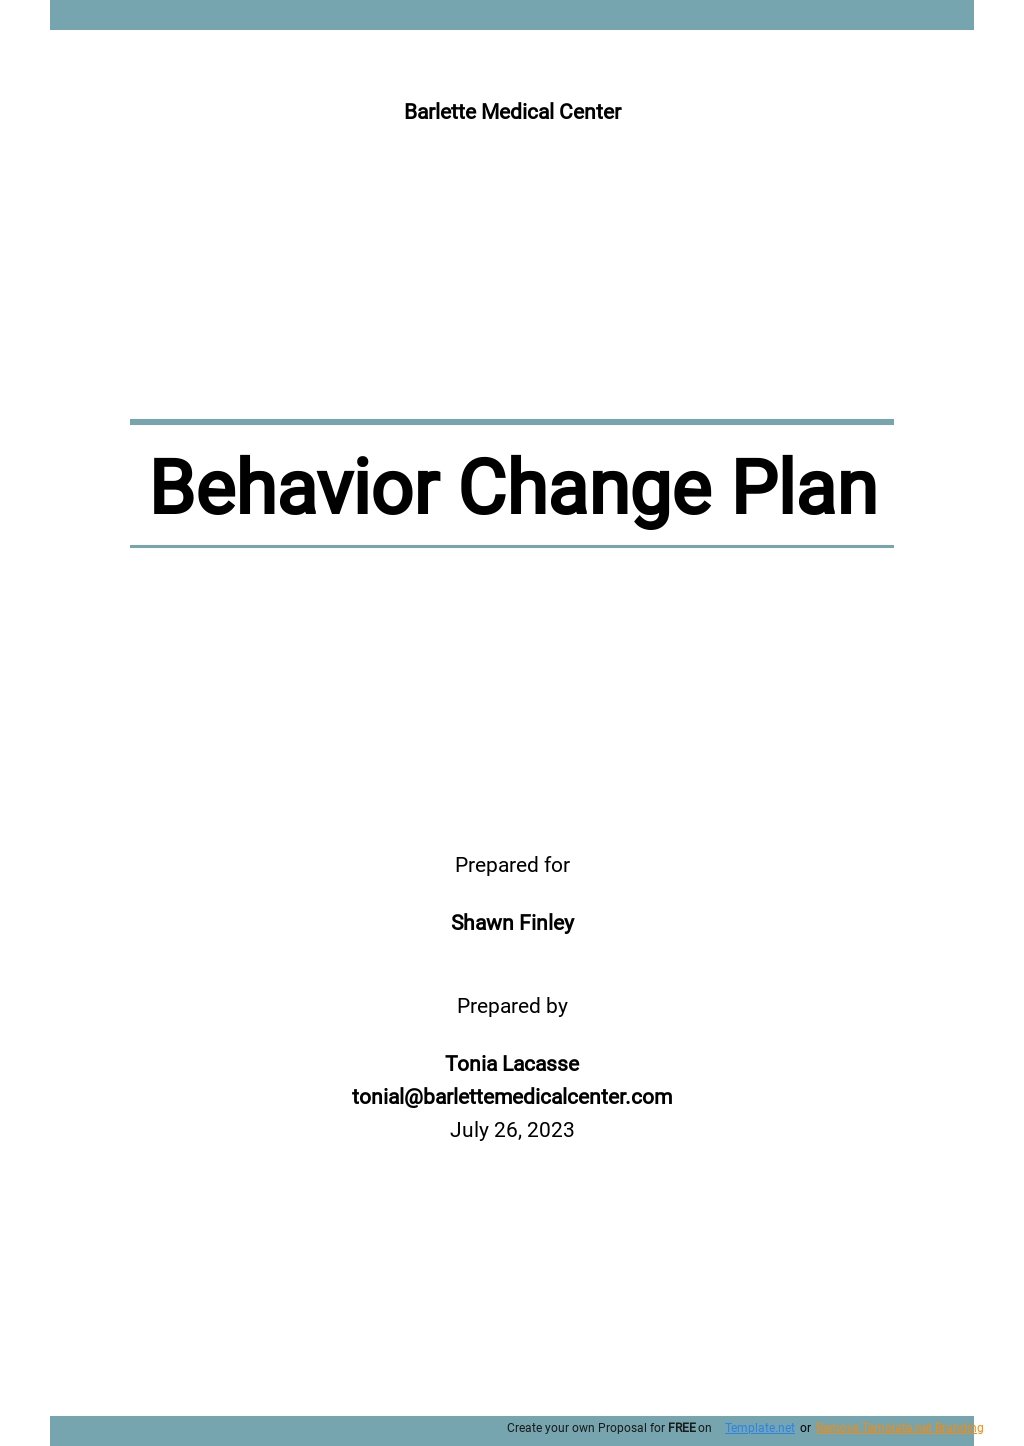 Basic Behavior Change Plan Template.jpe